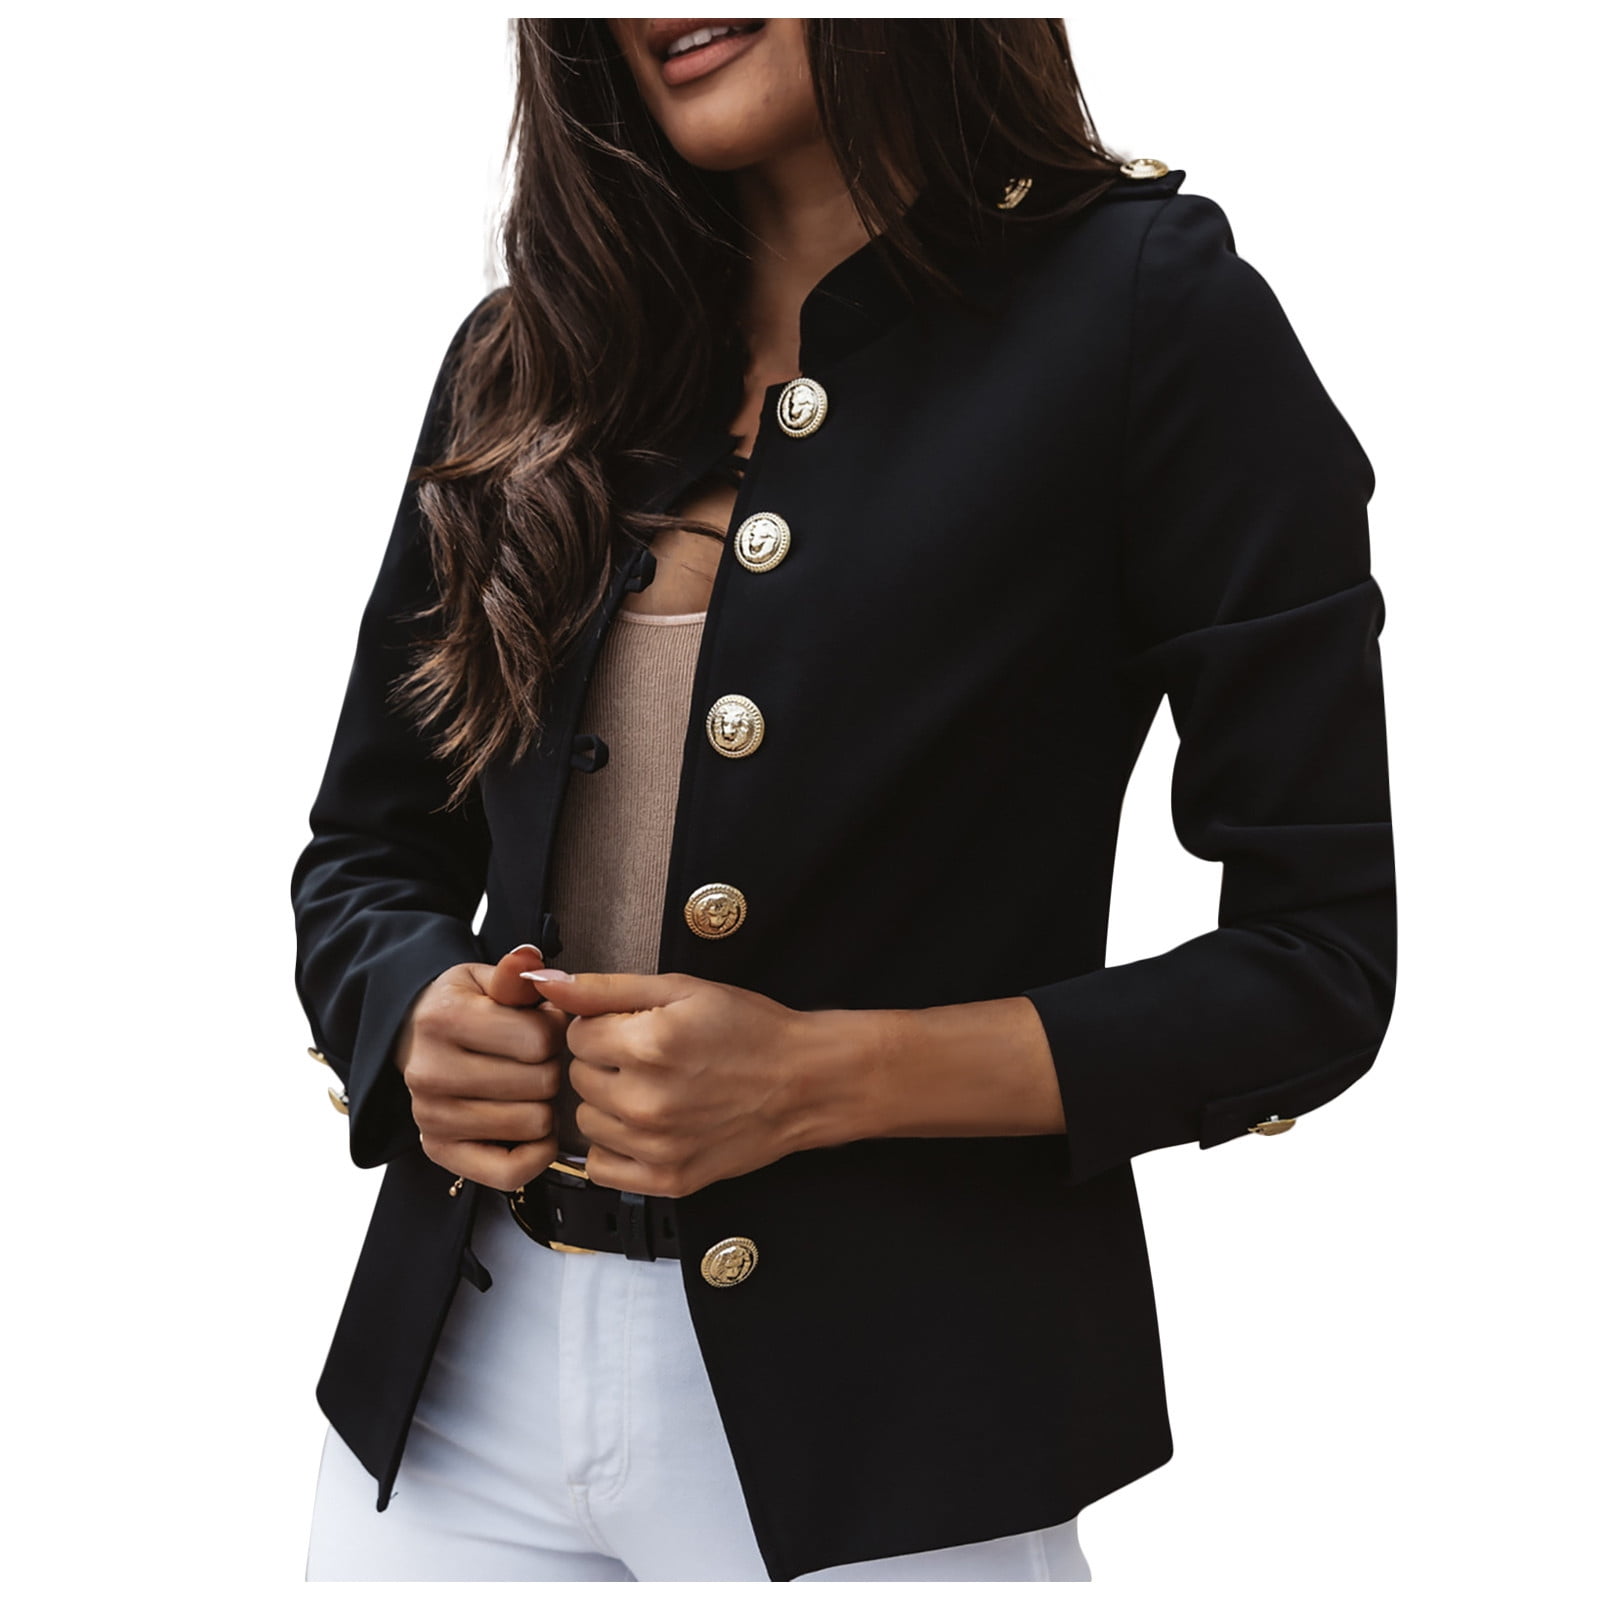 Promotion Fall Winte Women's Jacket Coat Suit Collar Ladies Casual